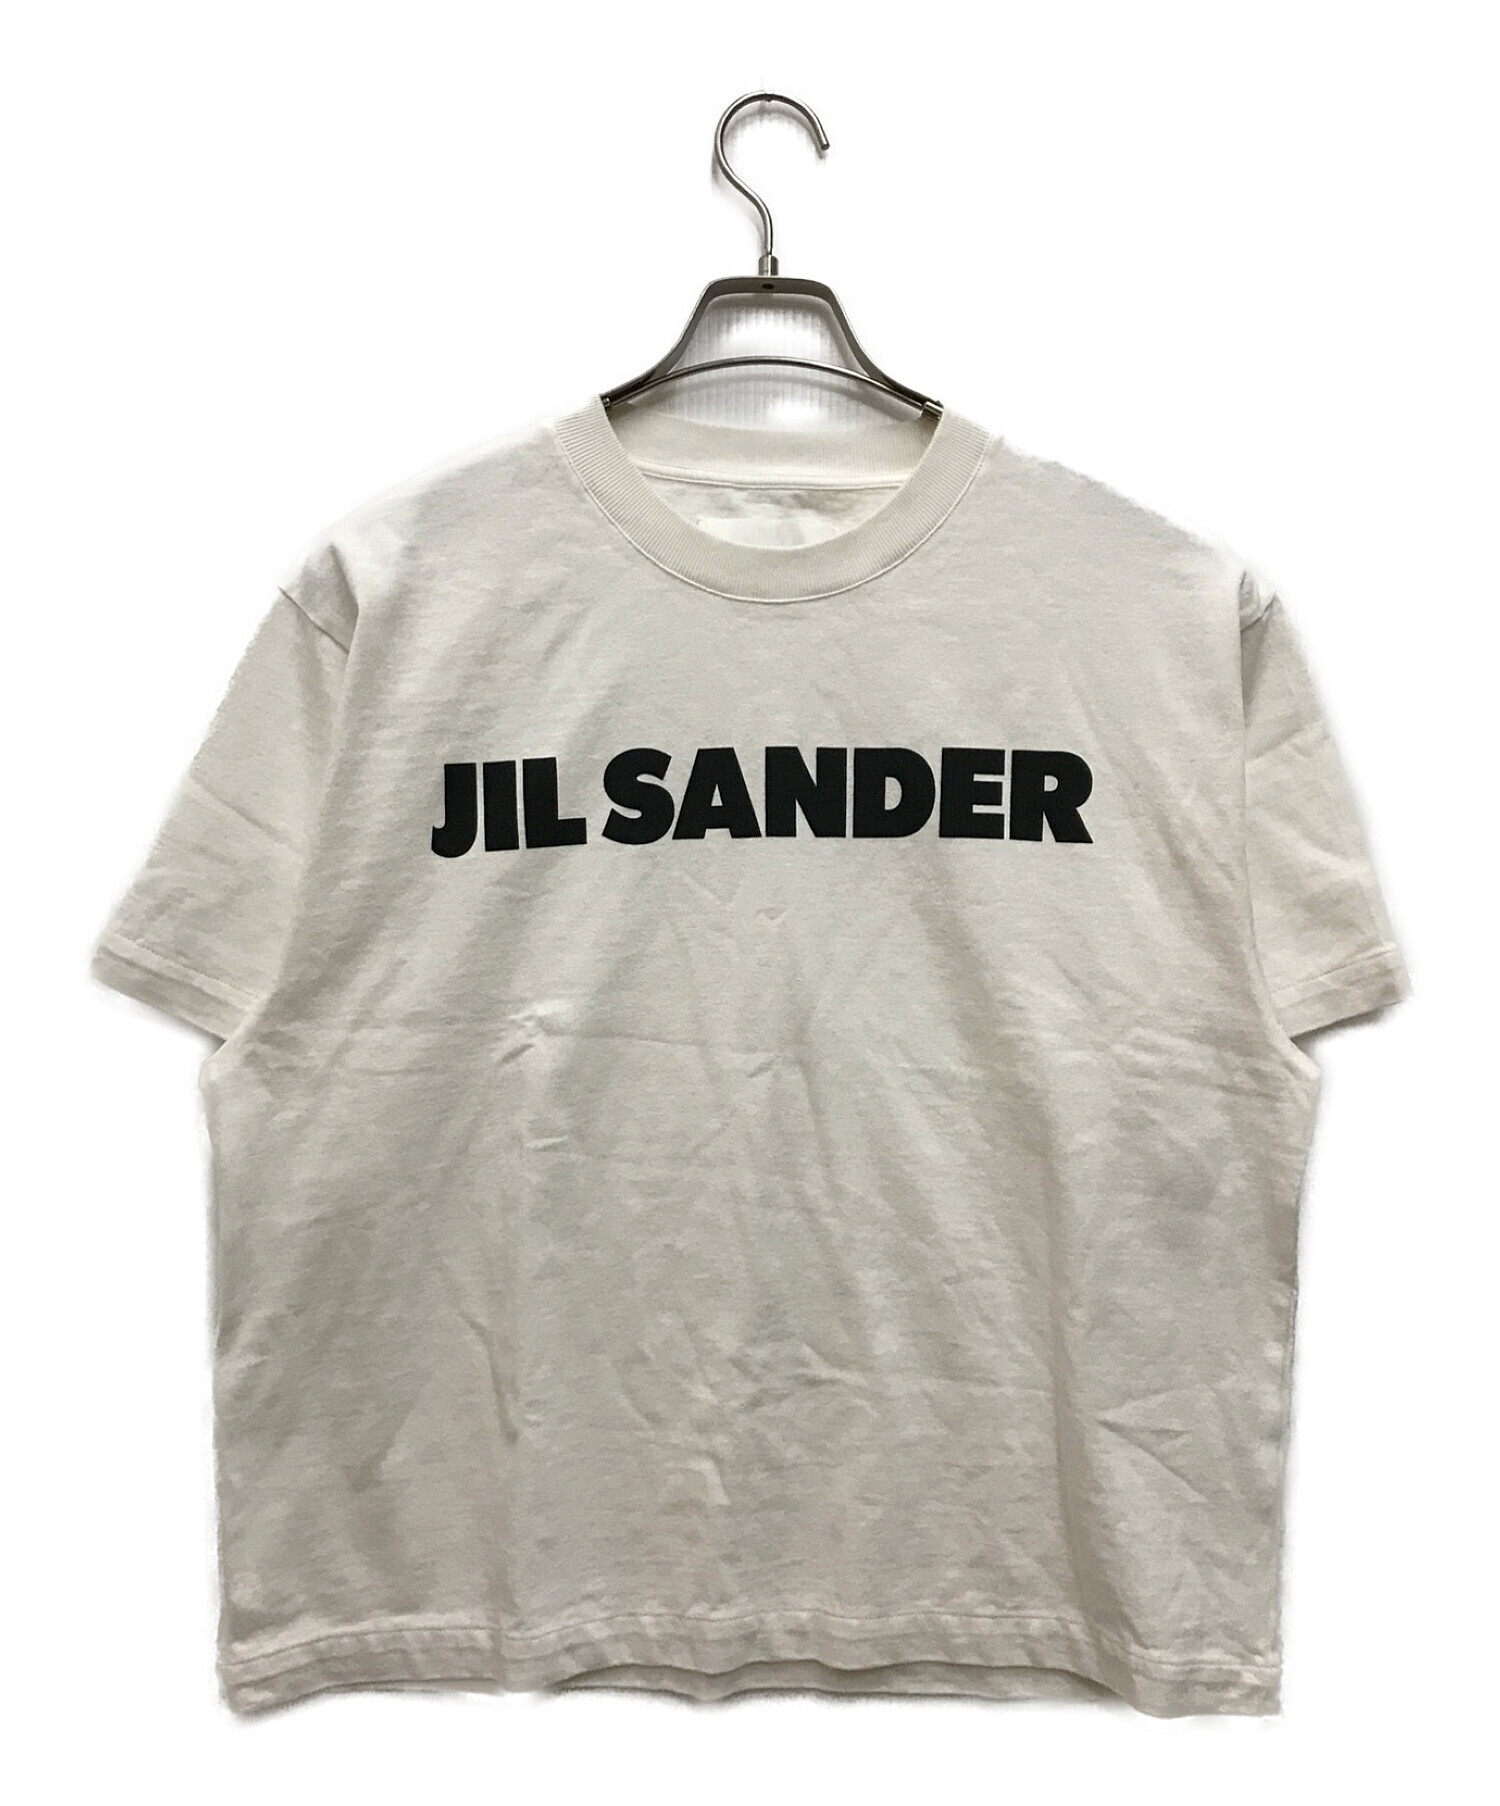 JIL SANDER (ジルサンダー) ロゴプリントTシャツ ホワイト サイズ:S